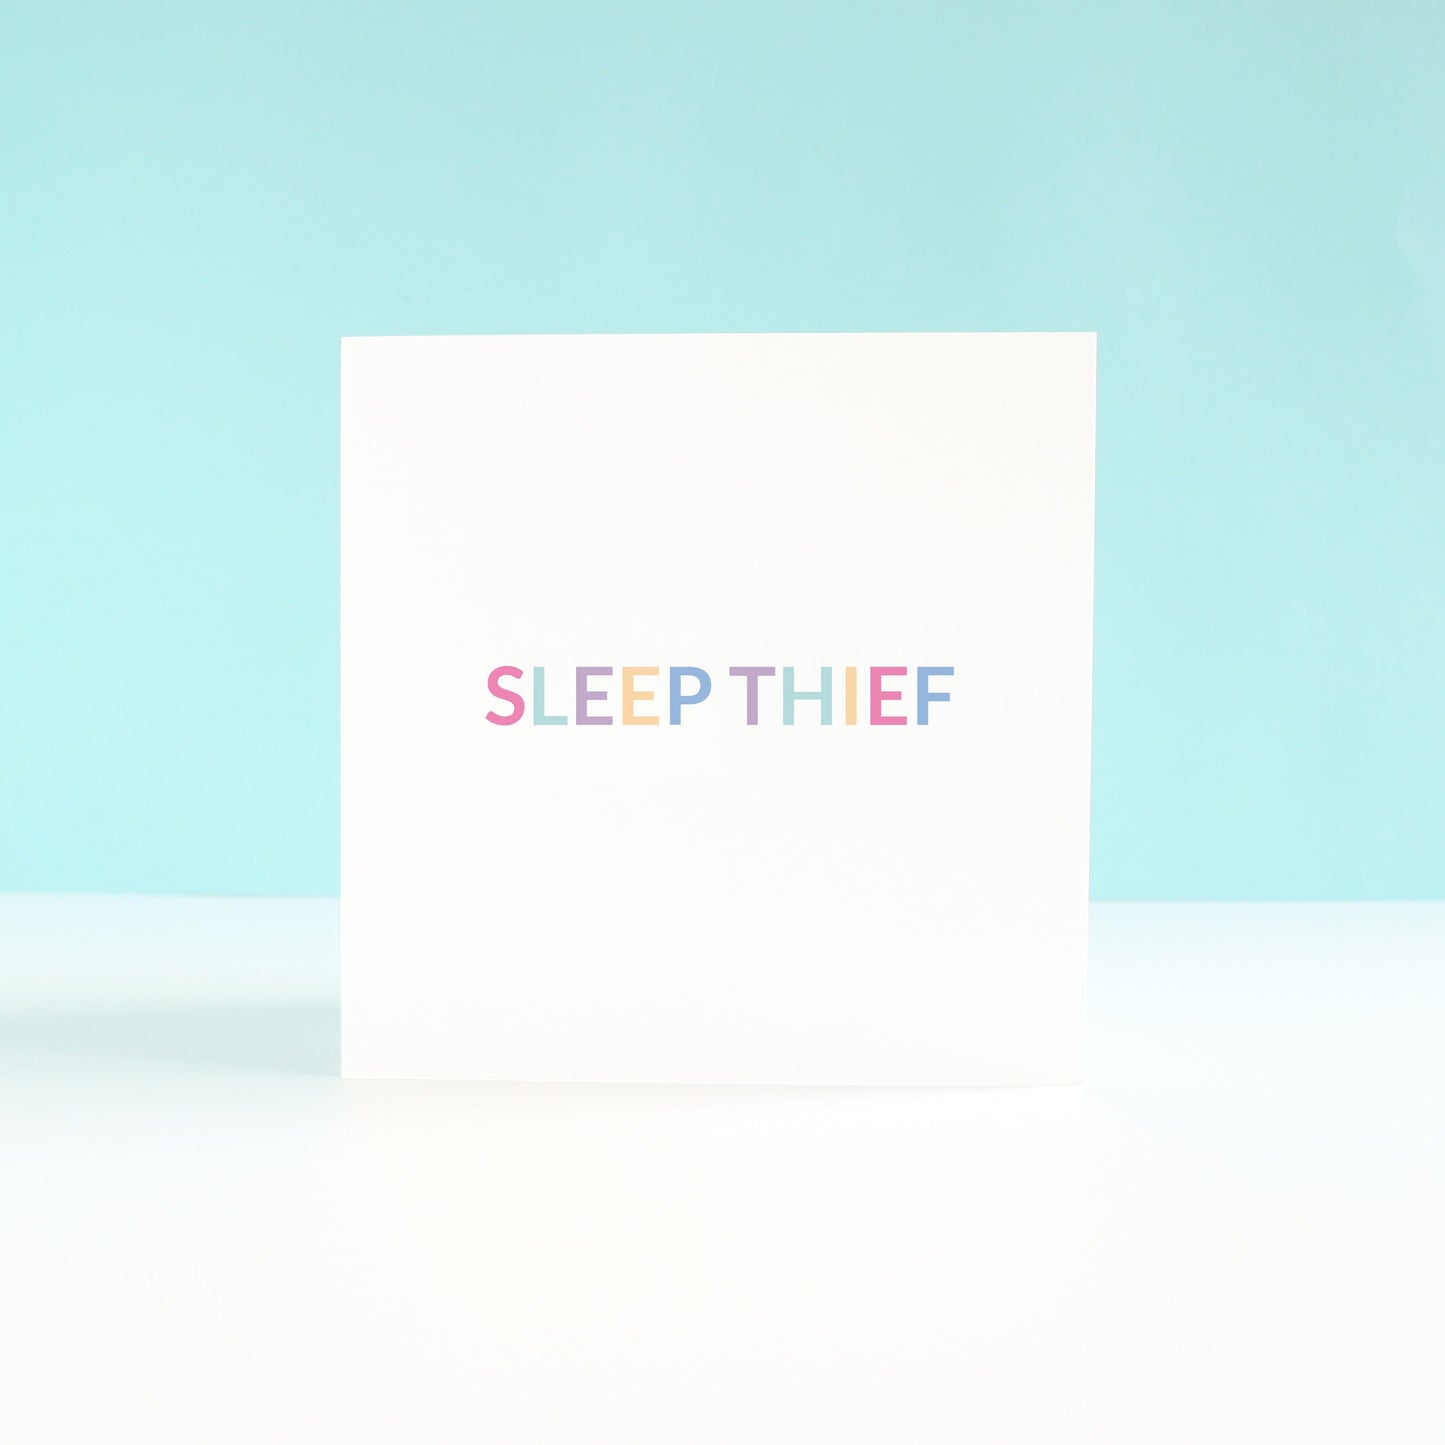 Sleep thief card